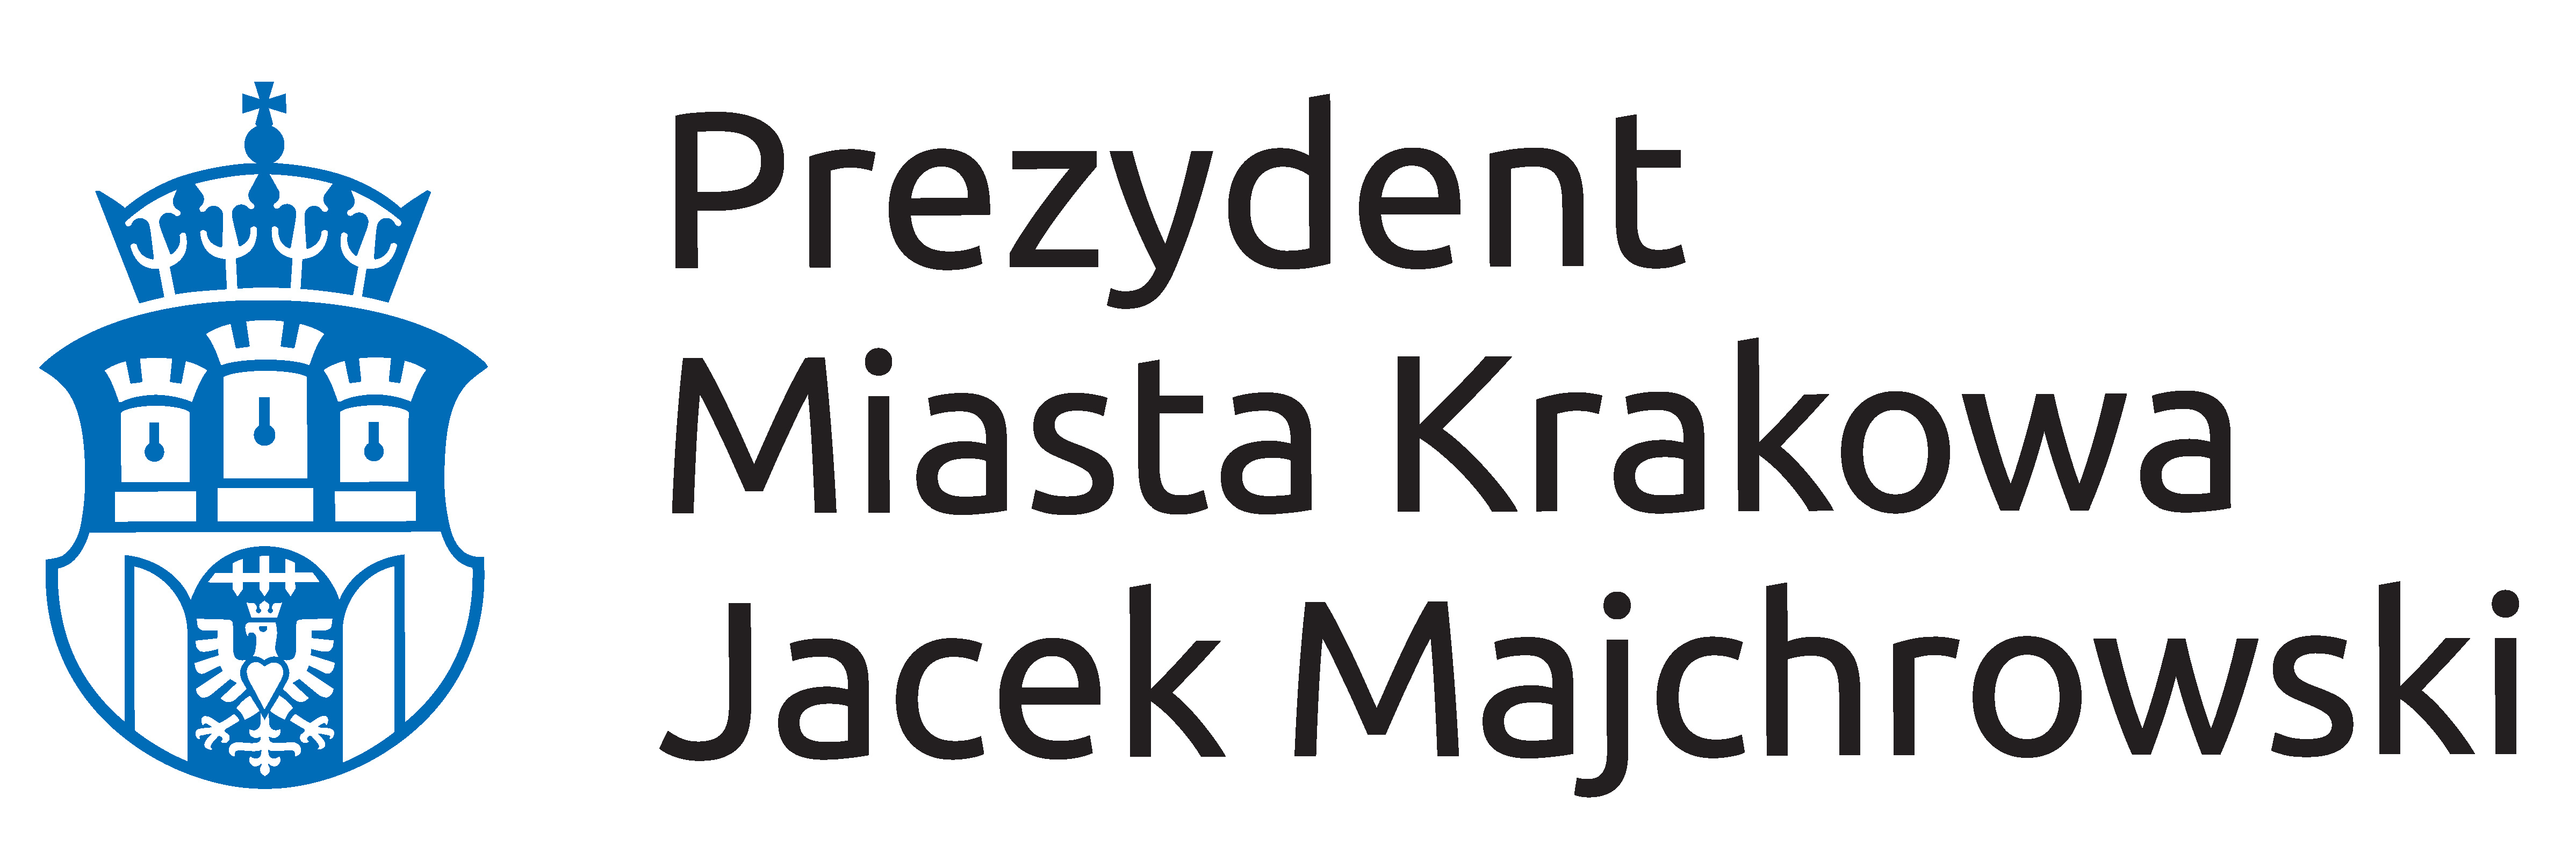 Prezydent Miasta Krakowa